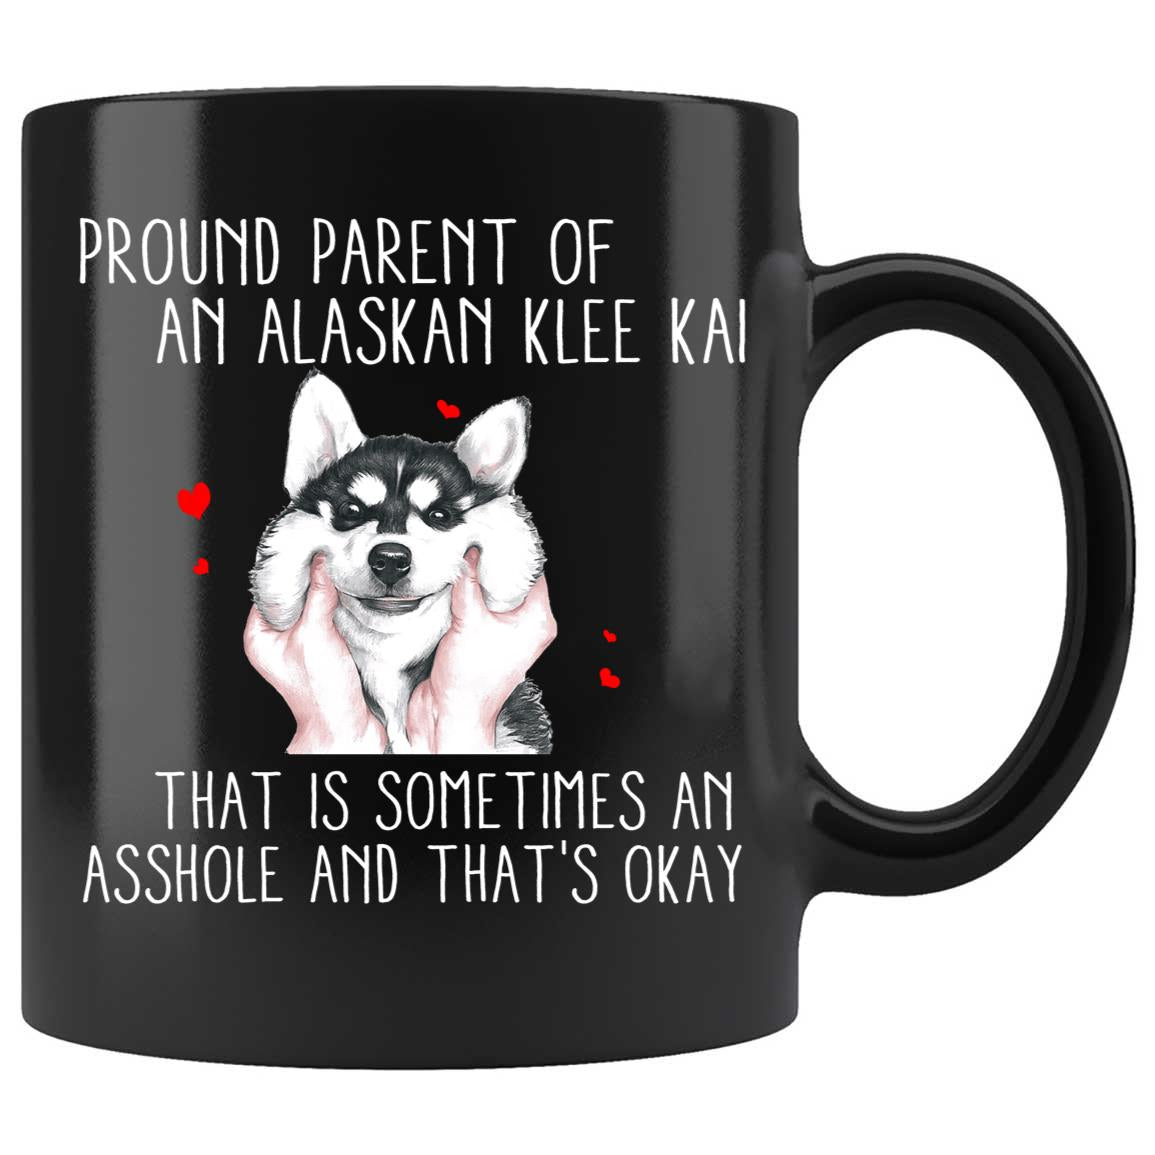 Skitongifts Coffee Mug Funny Ceramic Novelty M79-NH251221- Pround Parent Of An Alaskan Klee Kai W7Cgbds